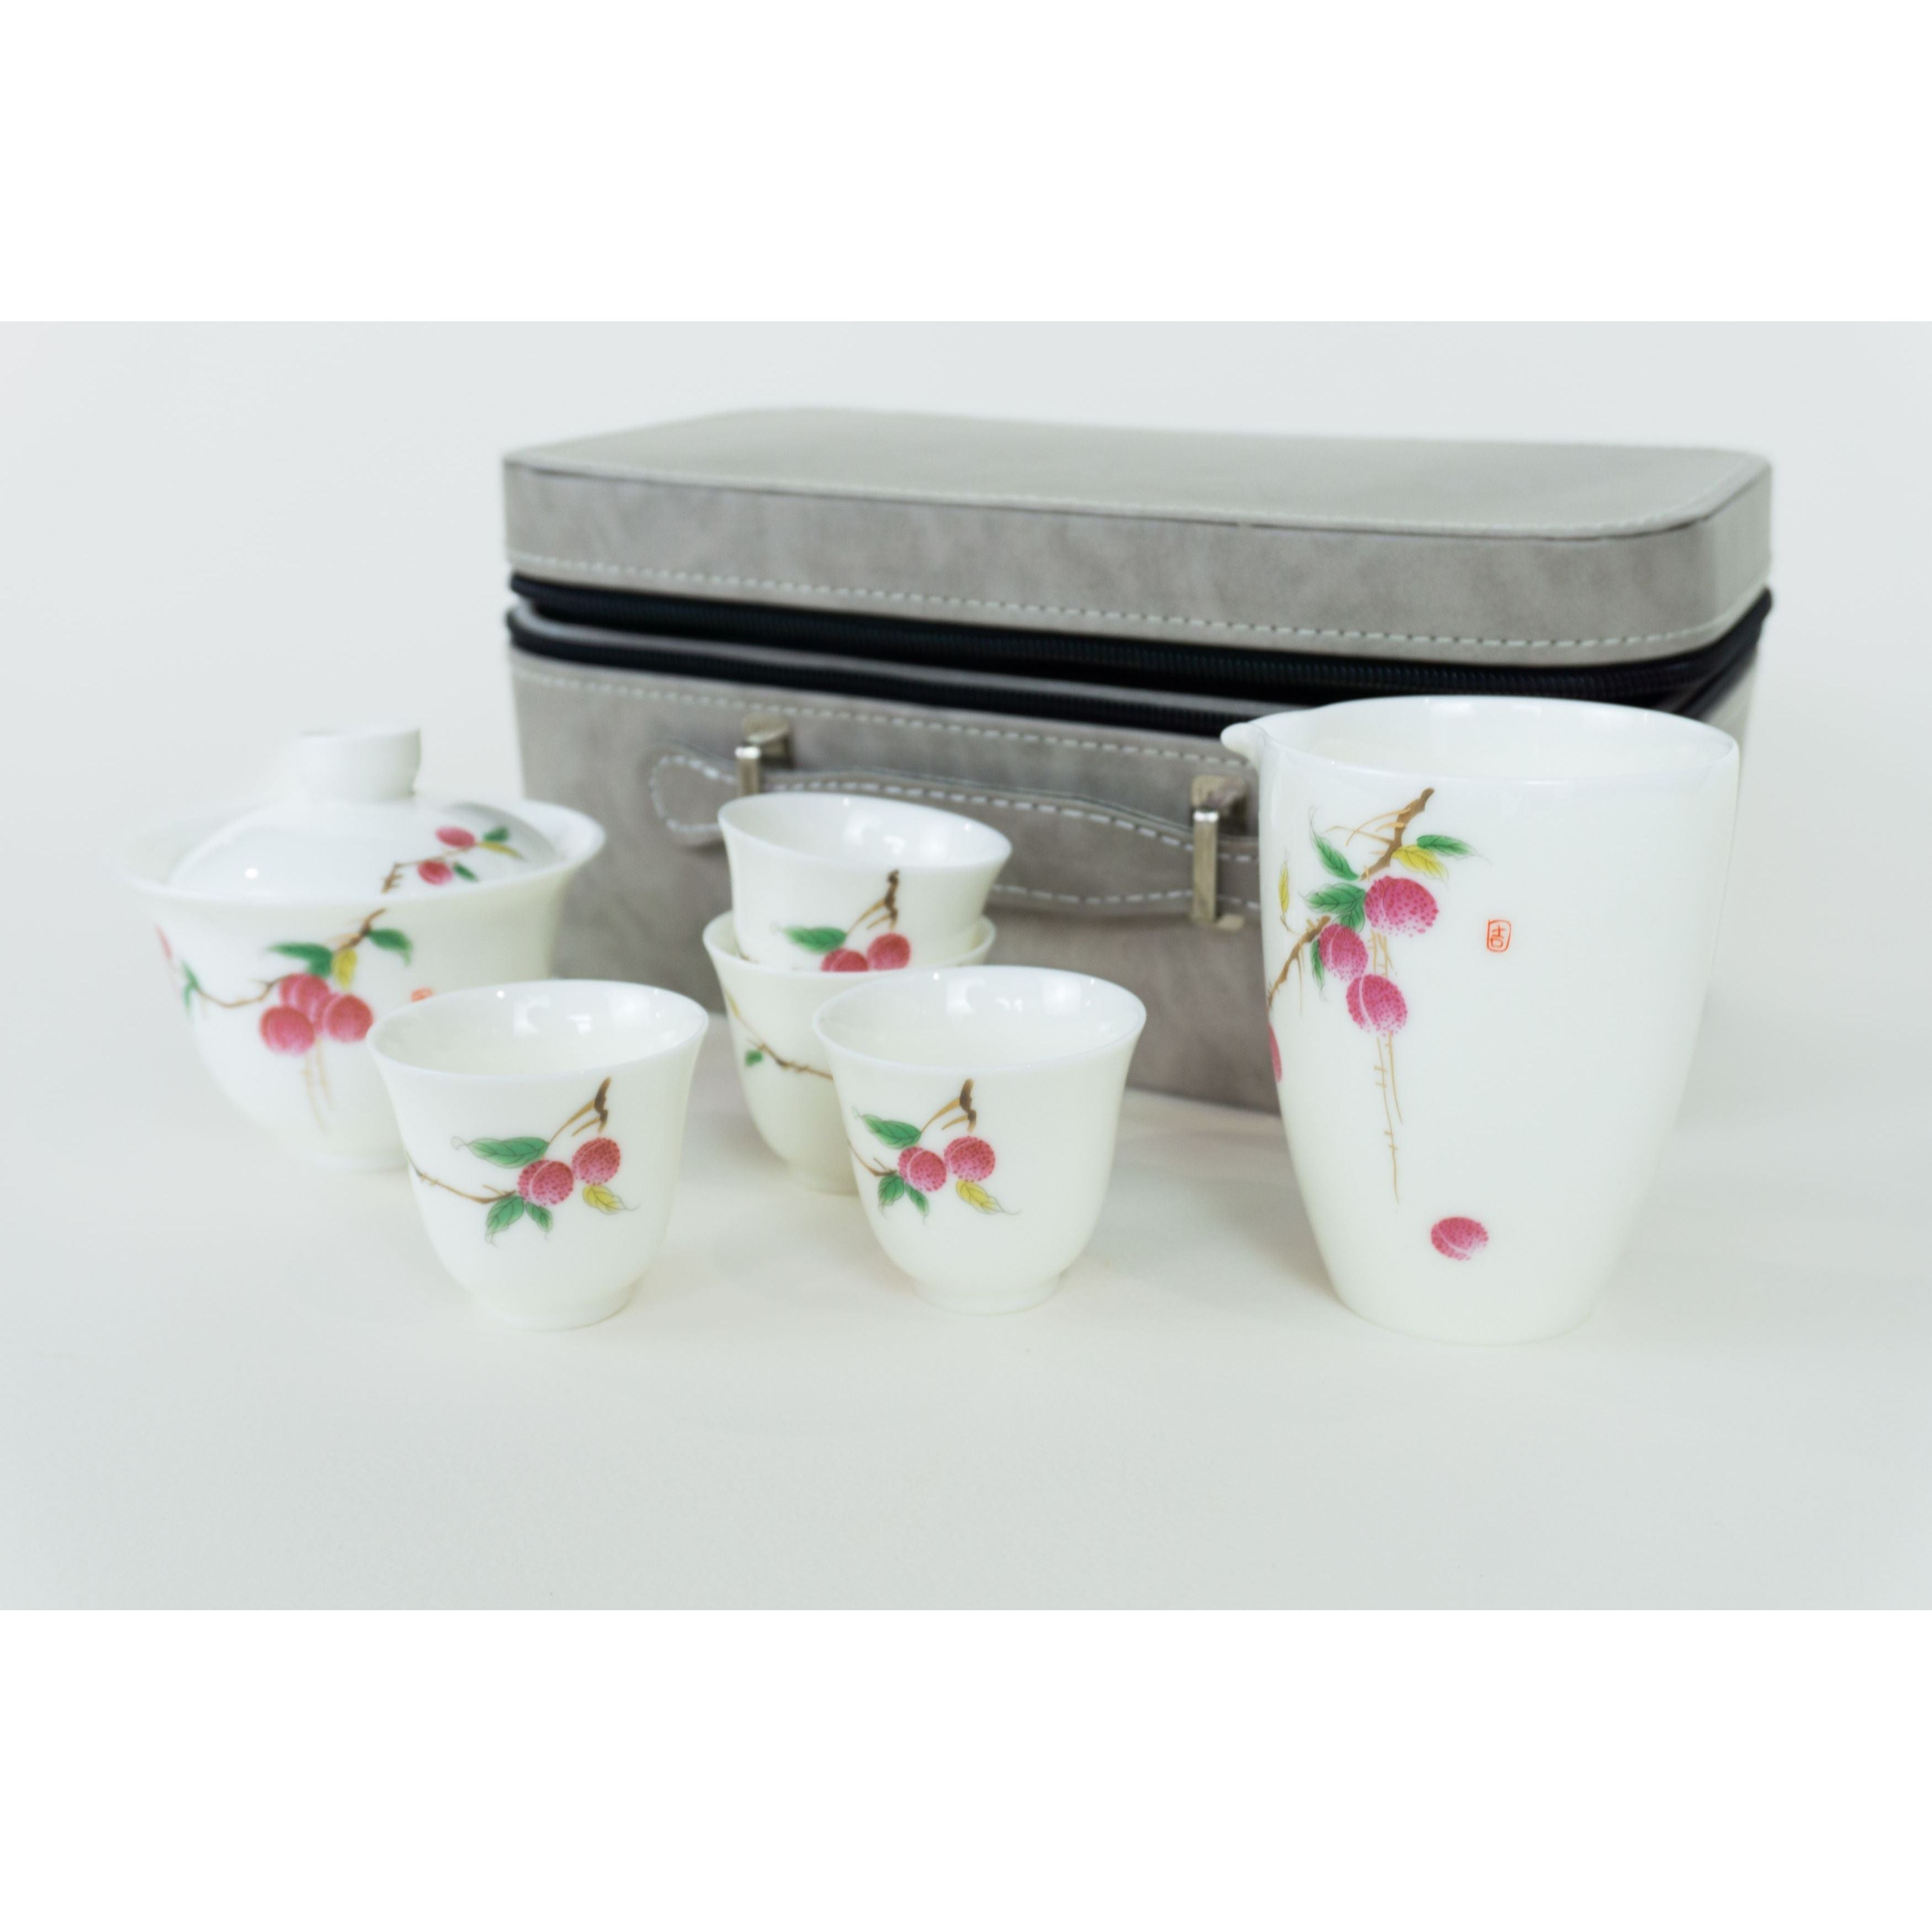 Tea Ceremony Set, Porcelain, Lychee Design, Carrying Case